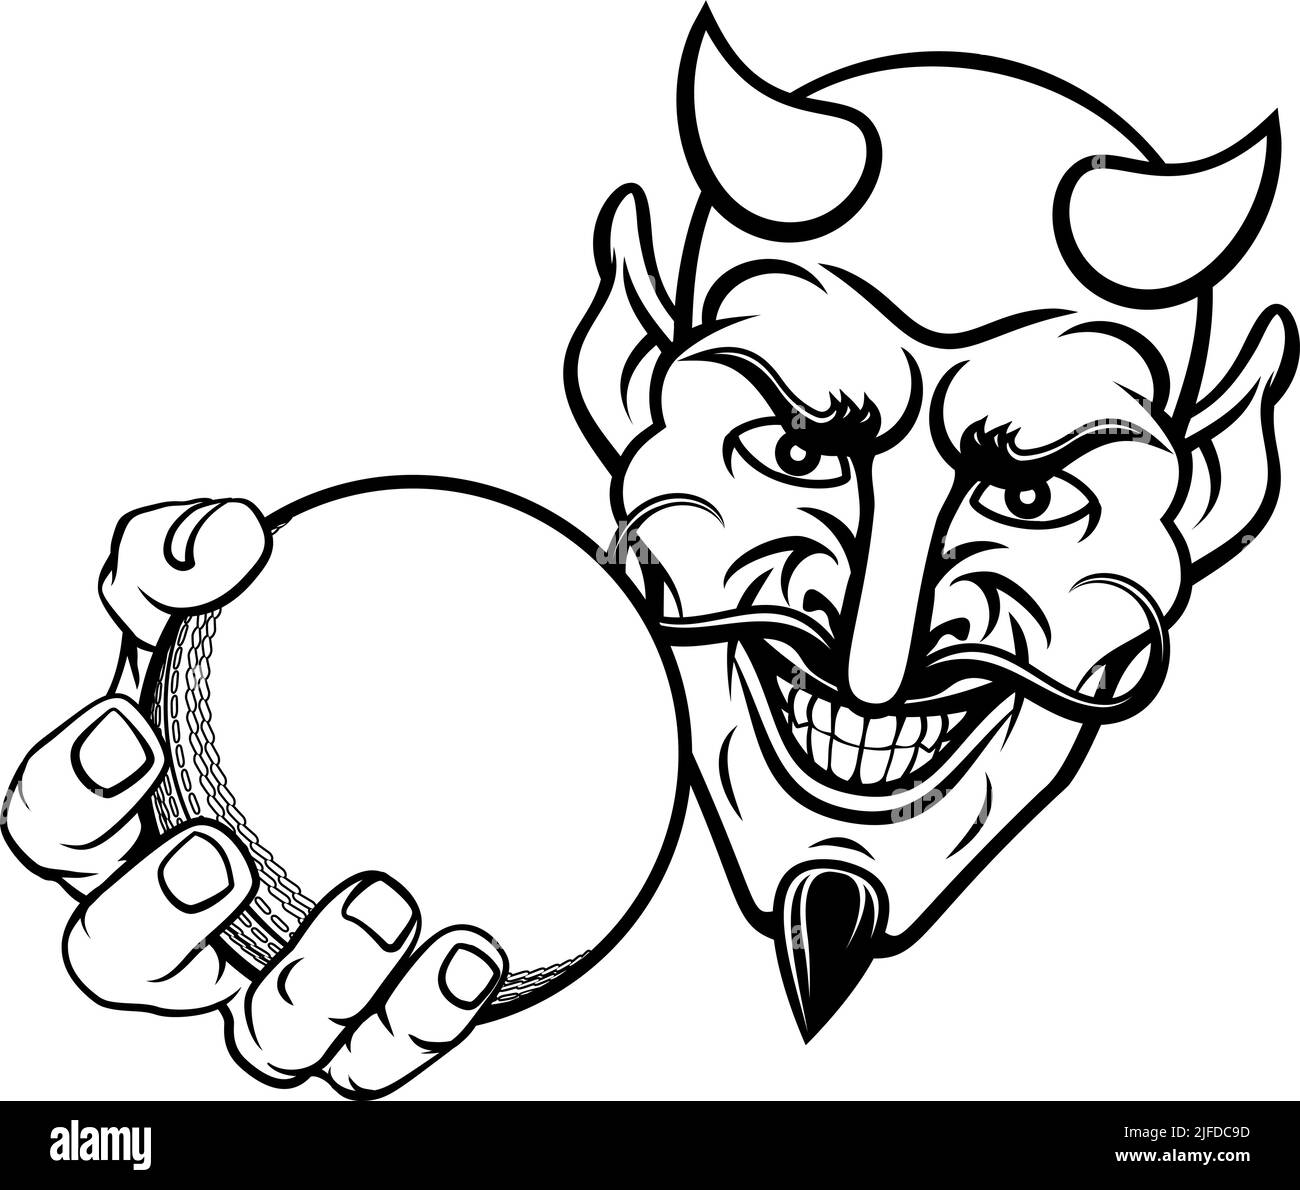 Devil Satan Cricket Sports Mascot Cartoon Stock Vector